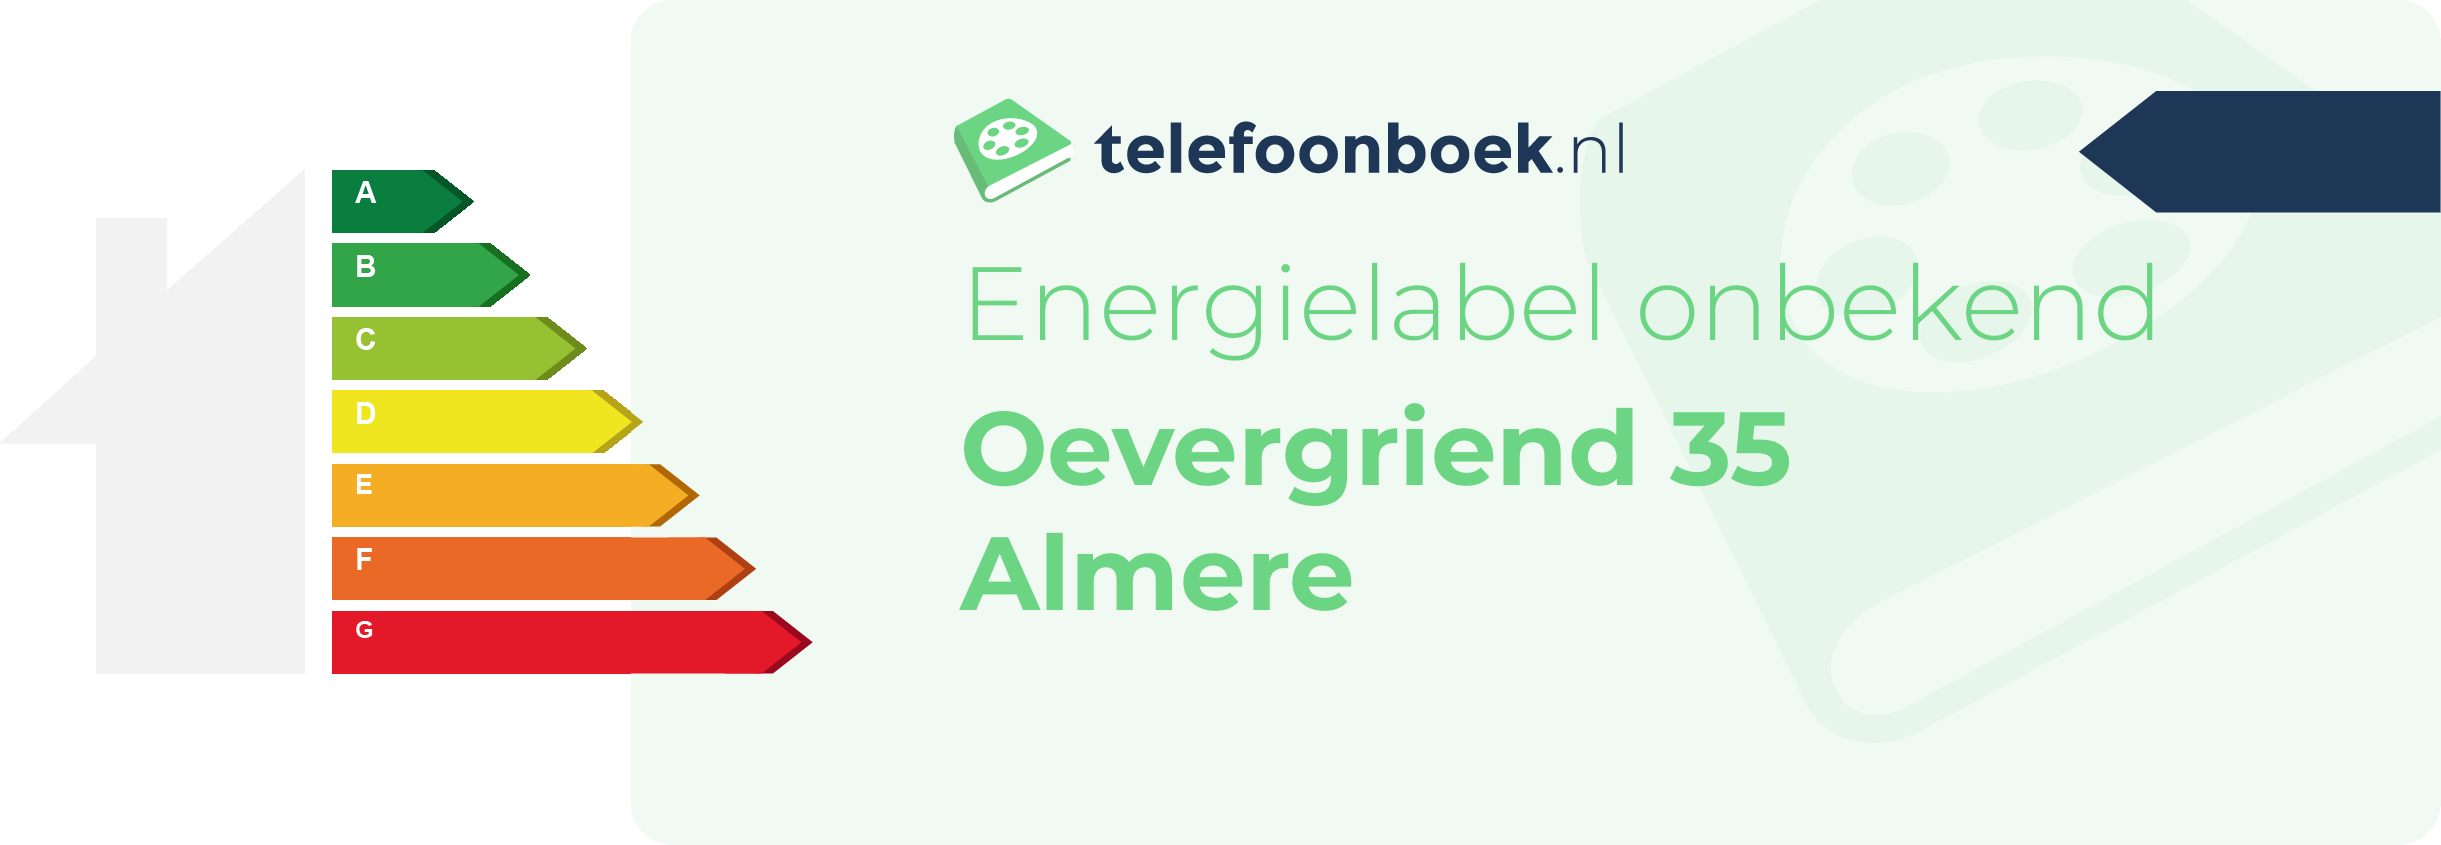 Energielabel Oevergriend 35 Almere